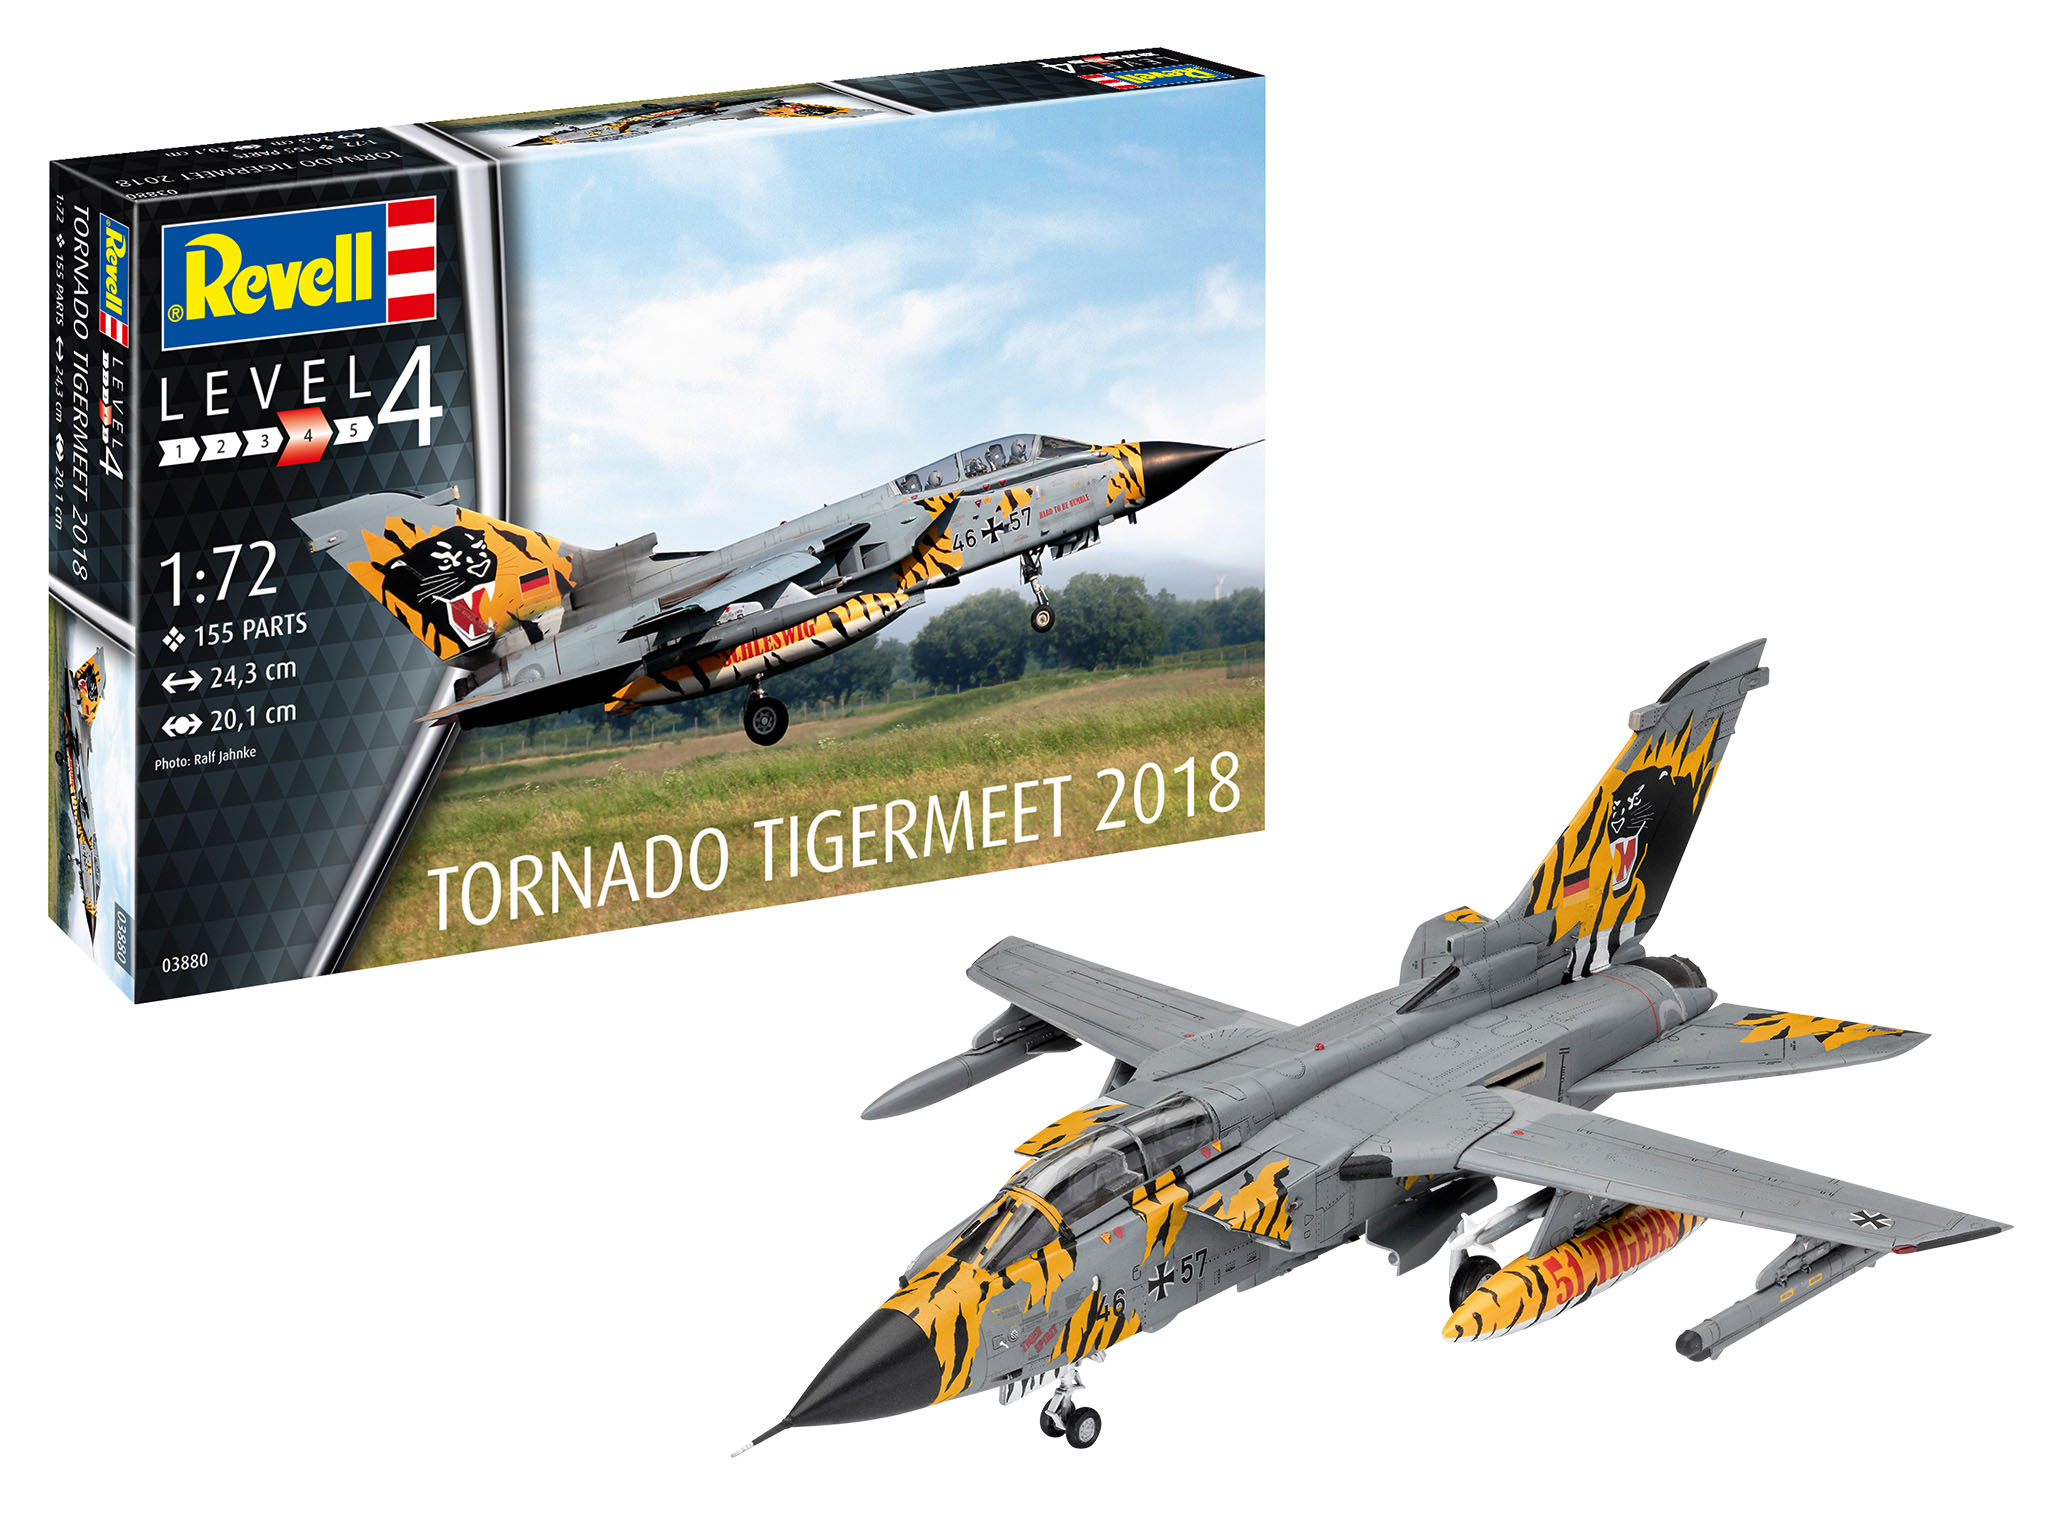 Tornado ECR "Tigermeet 2018"